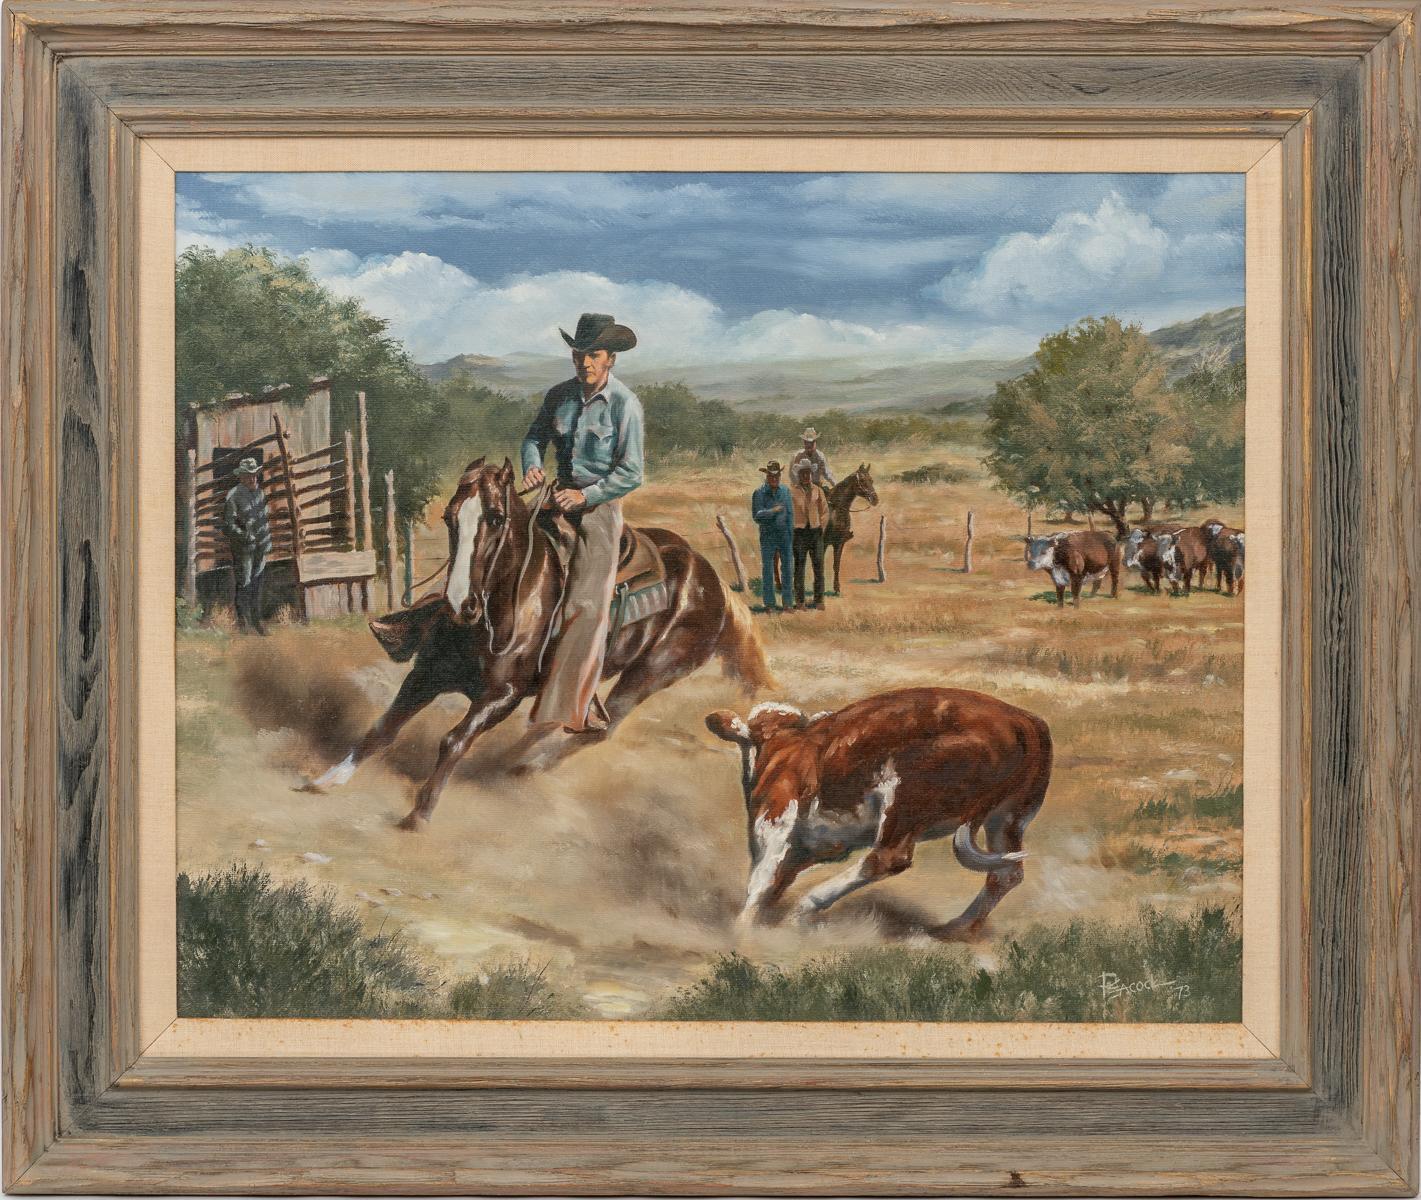 Joe Peacock, Cowboys at Work, 1973, oil on canvas, 24 x 30'